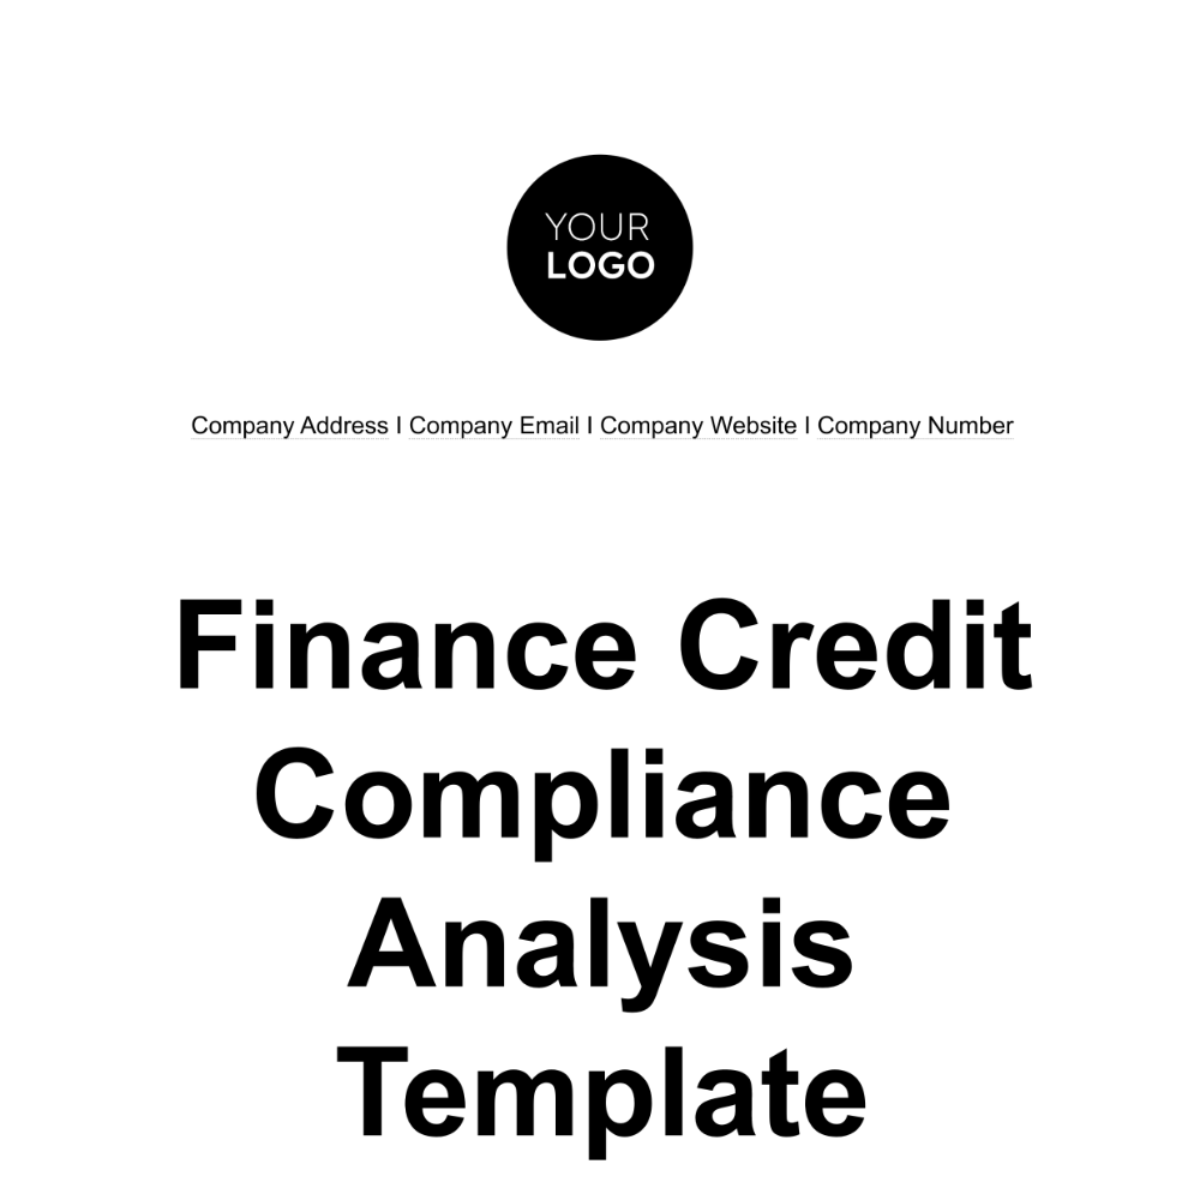 Finance Credit Compliance Analysis Template